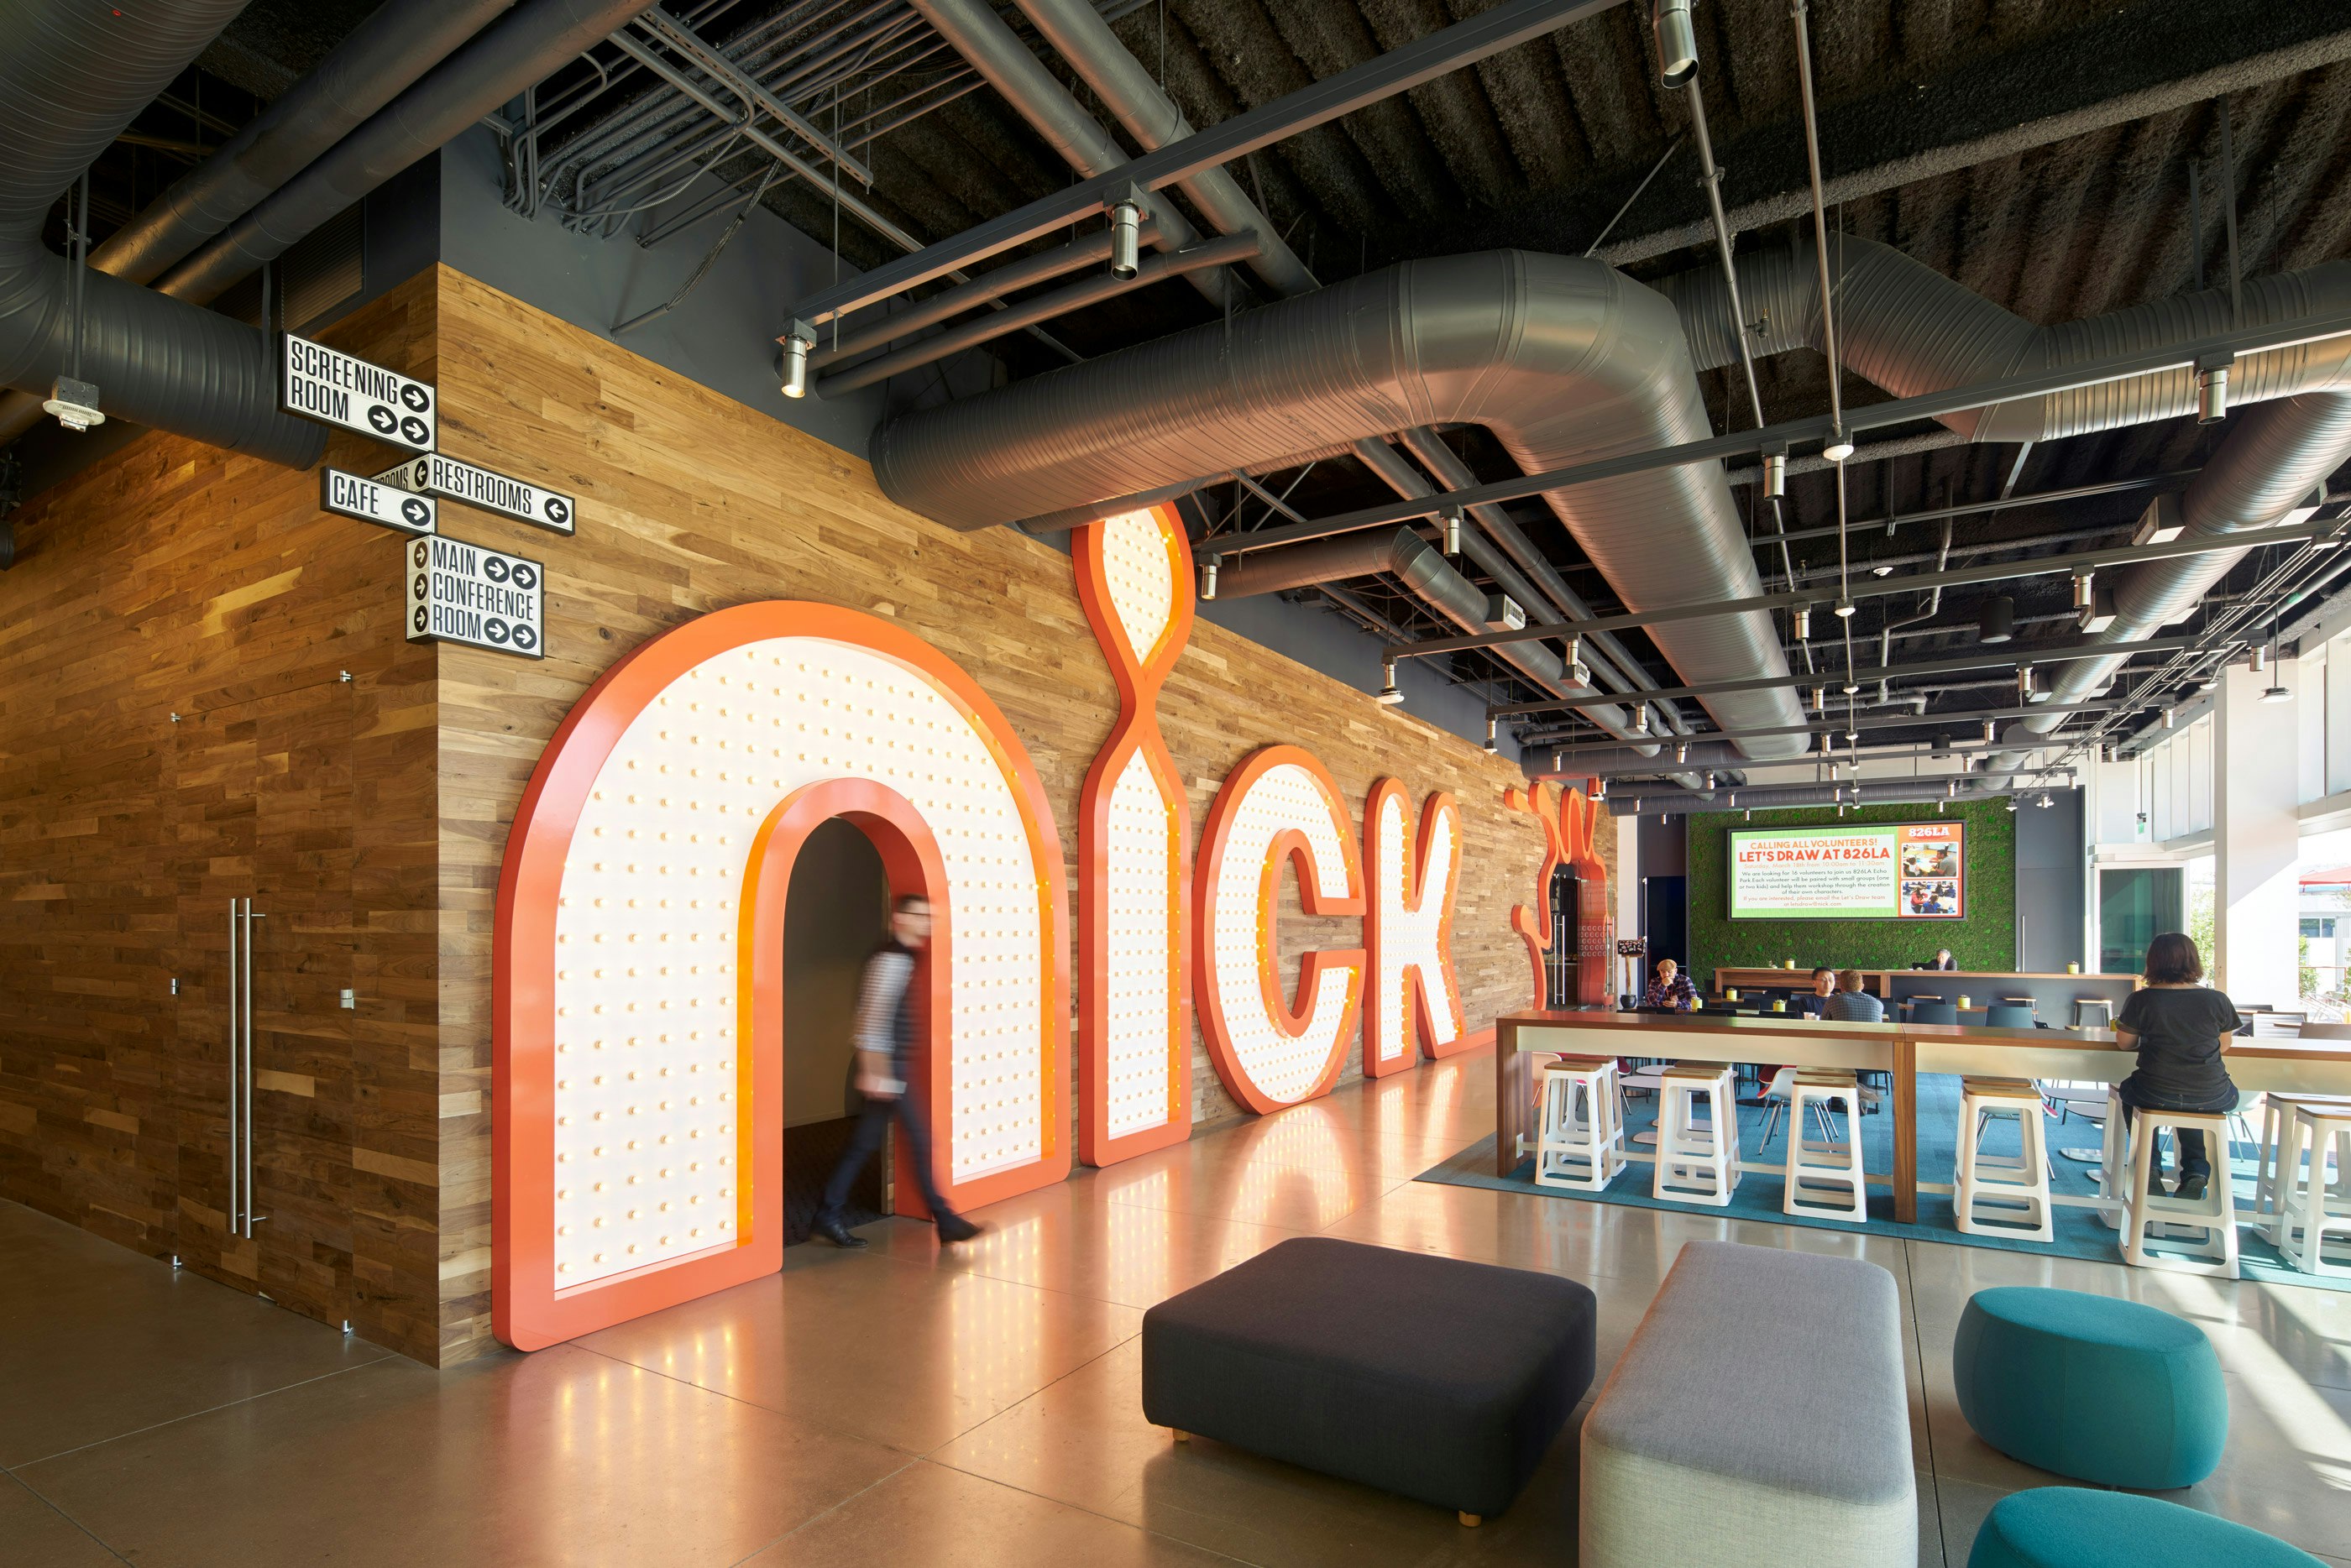 Nickelodeon West Coast Headquarters Campus - Burbank, CA